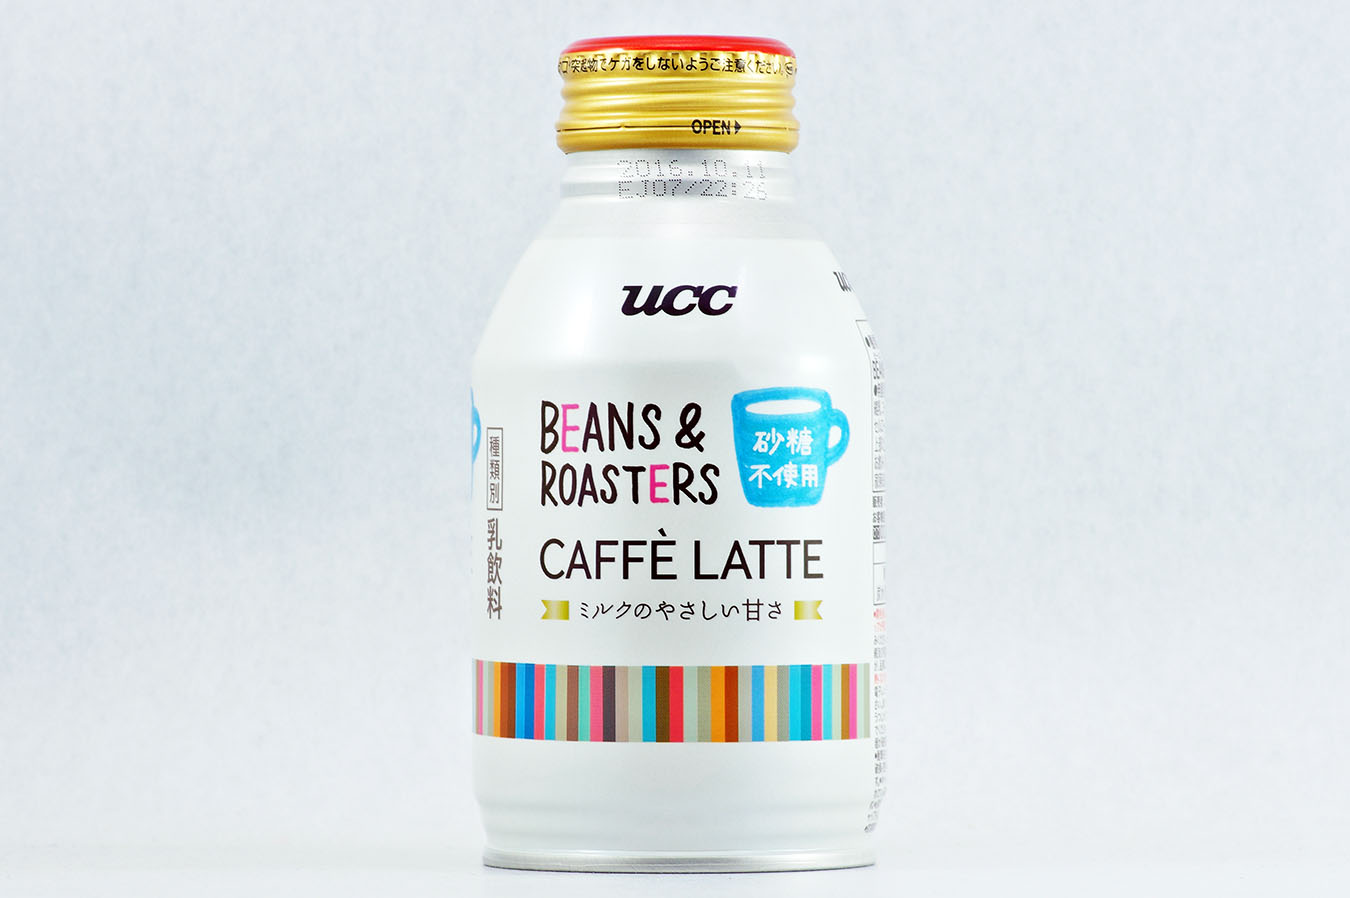 UCC BEANS & ROASTERS CAFFE LATTE 砂糖不使用